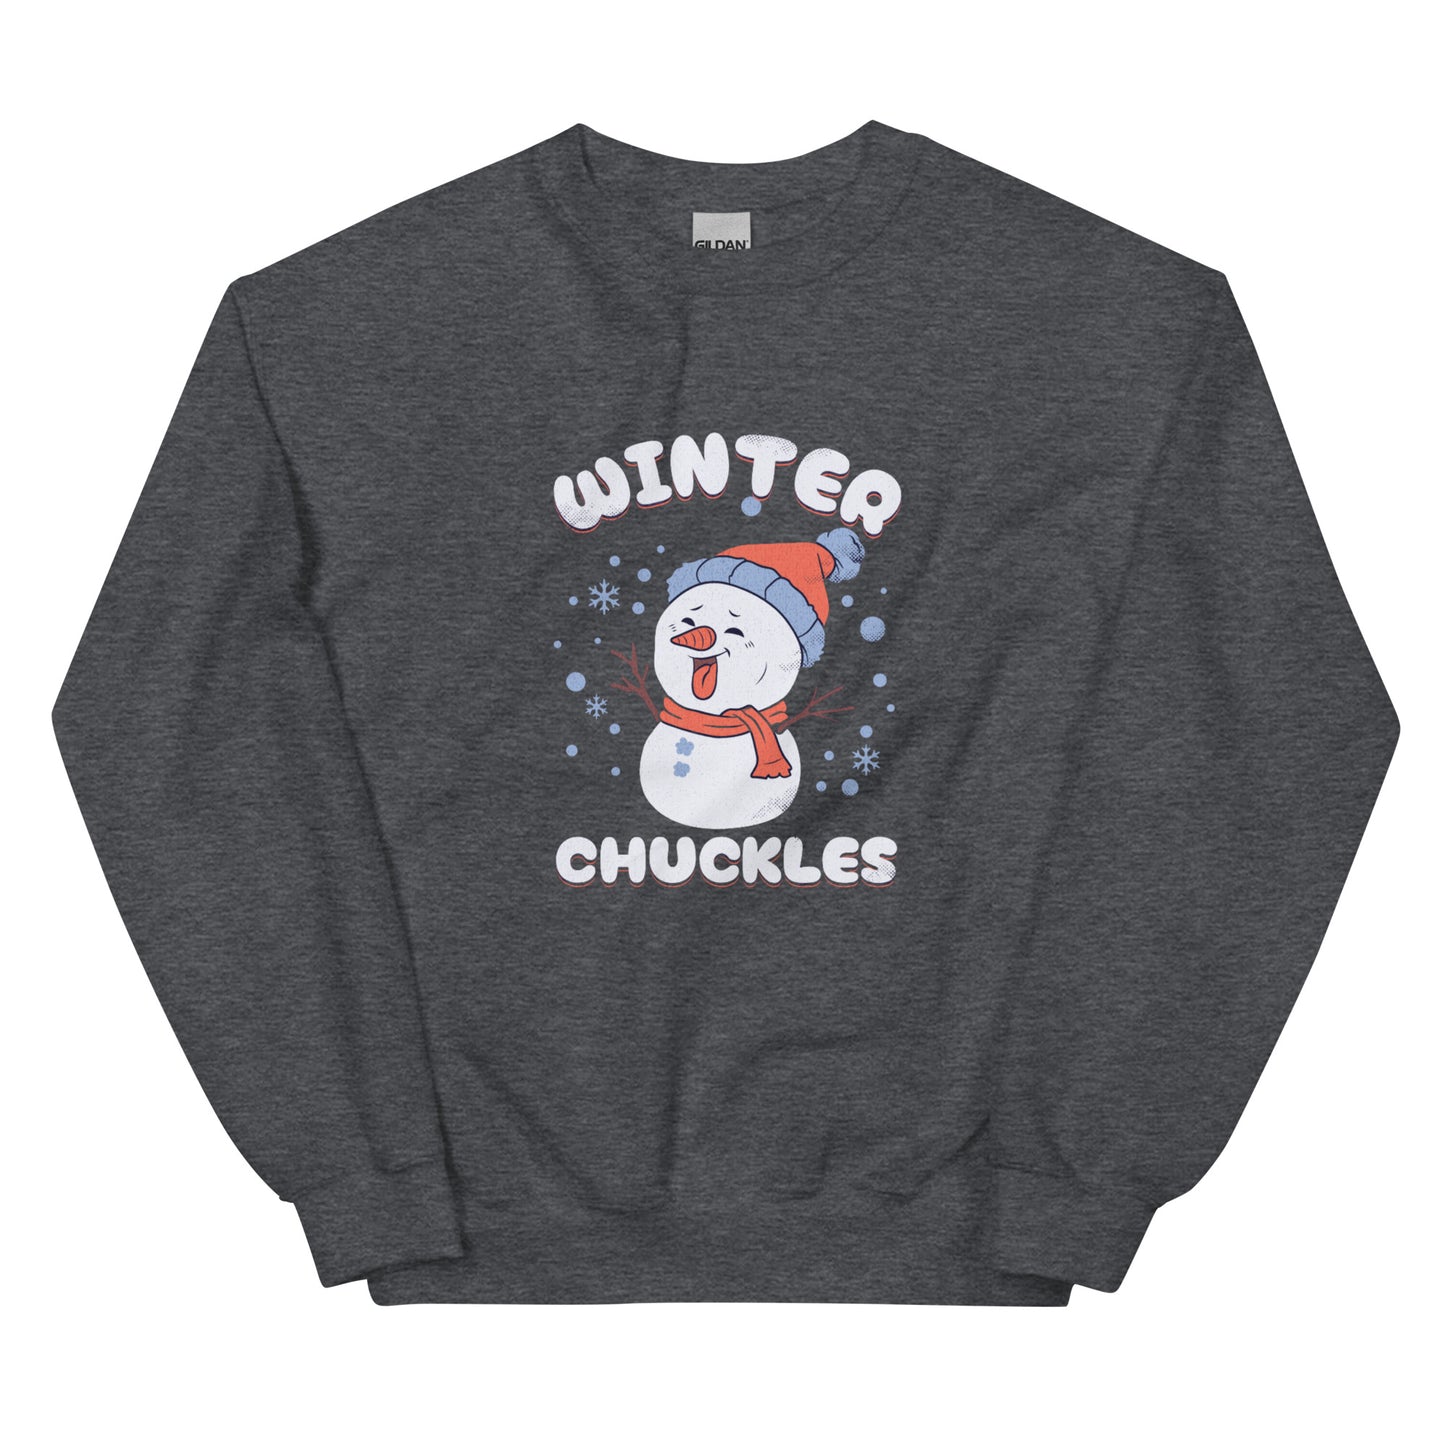 WINTER CHUCKLES - Unisex Sweatshirt